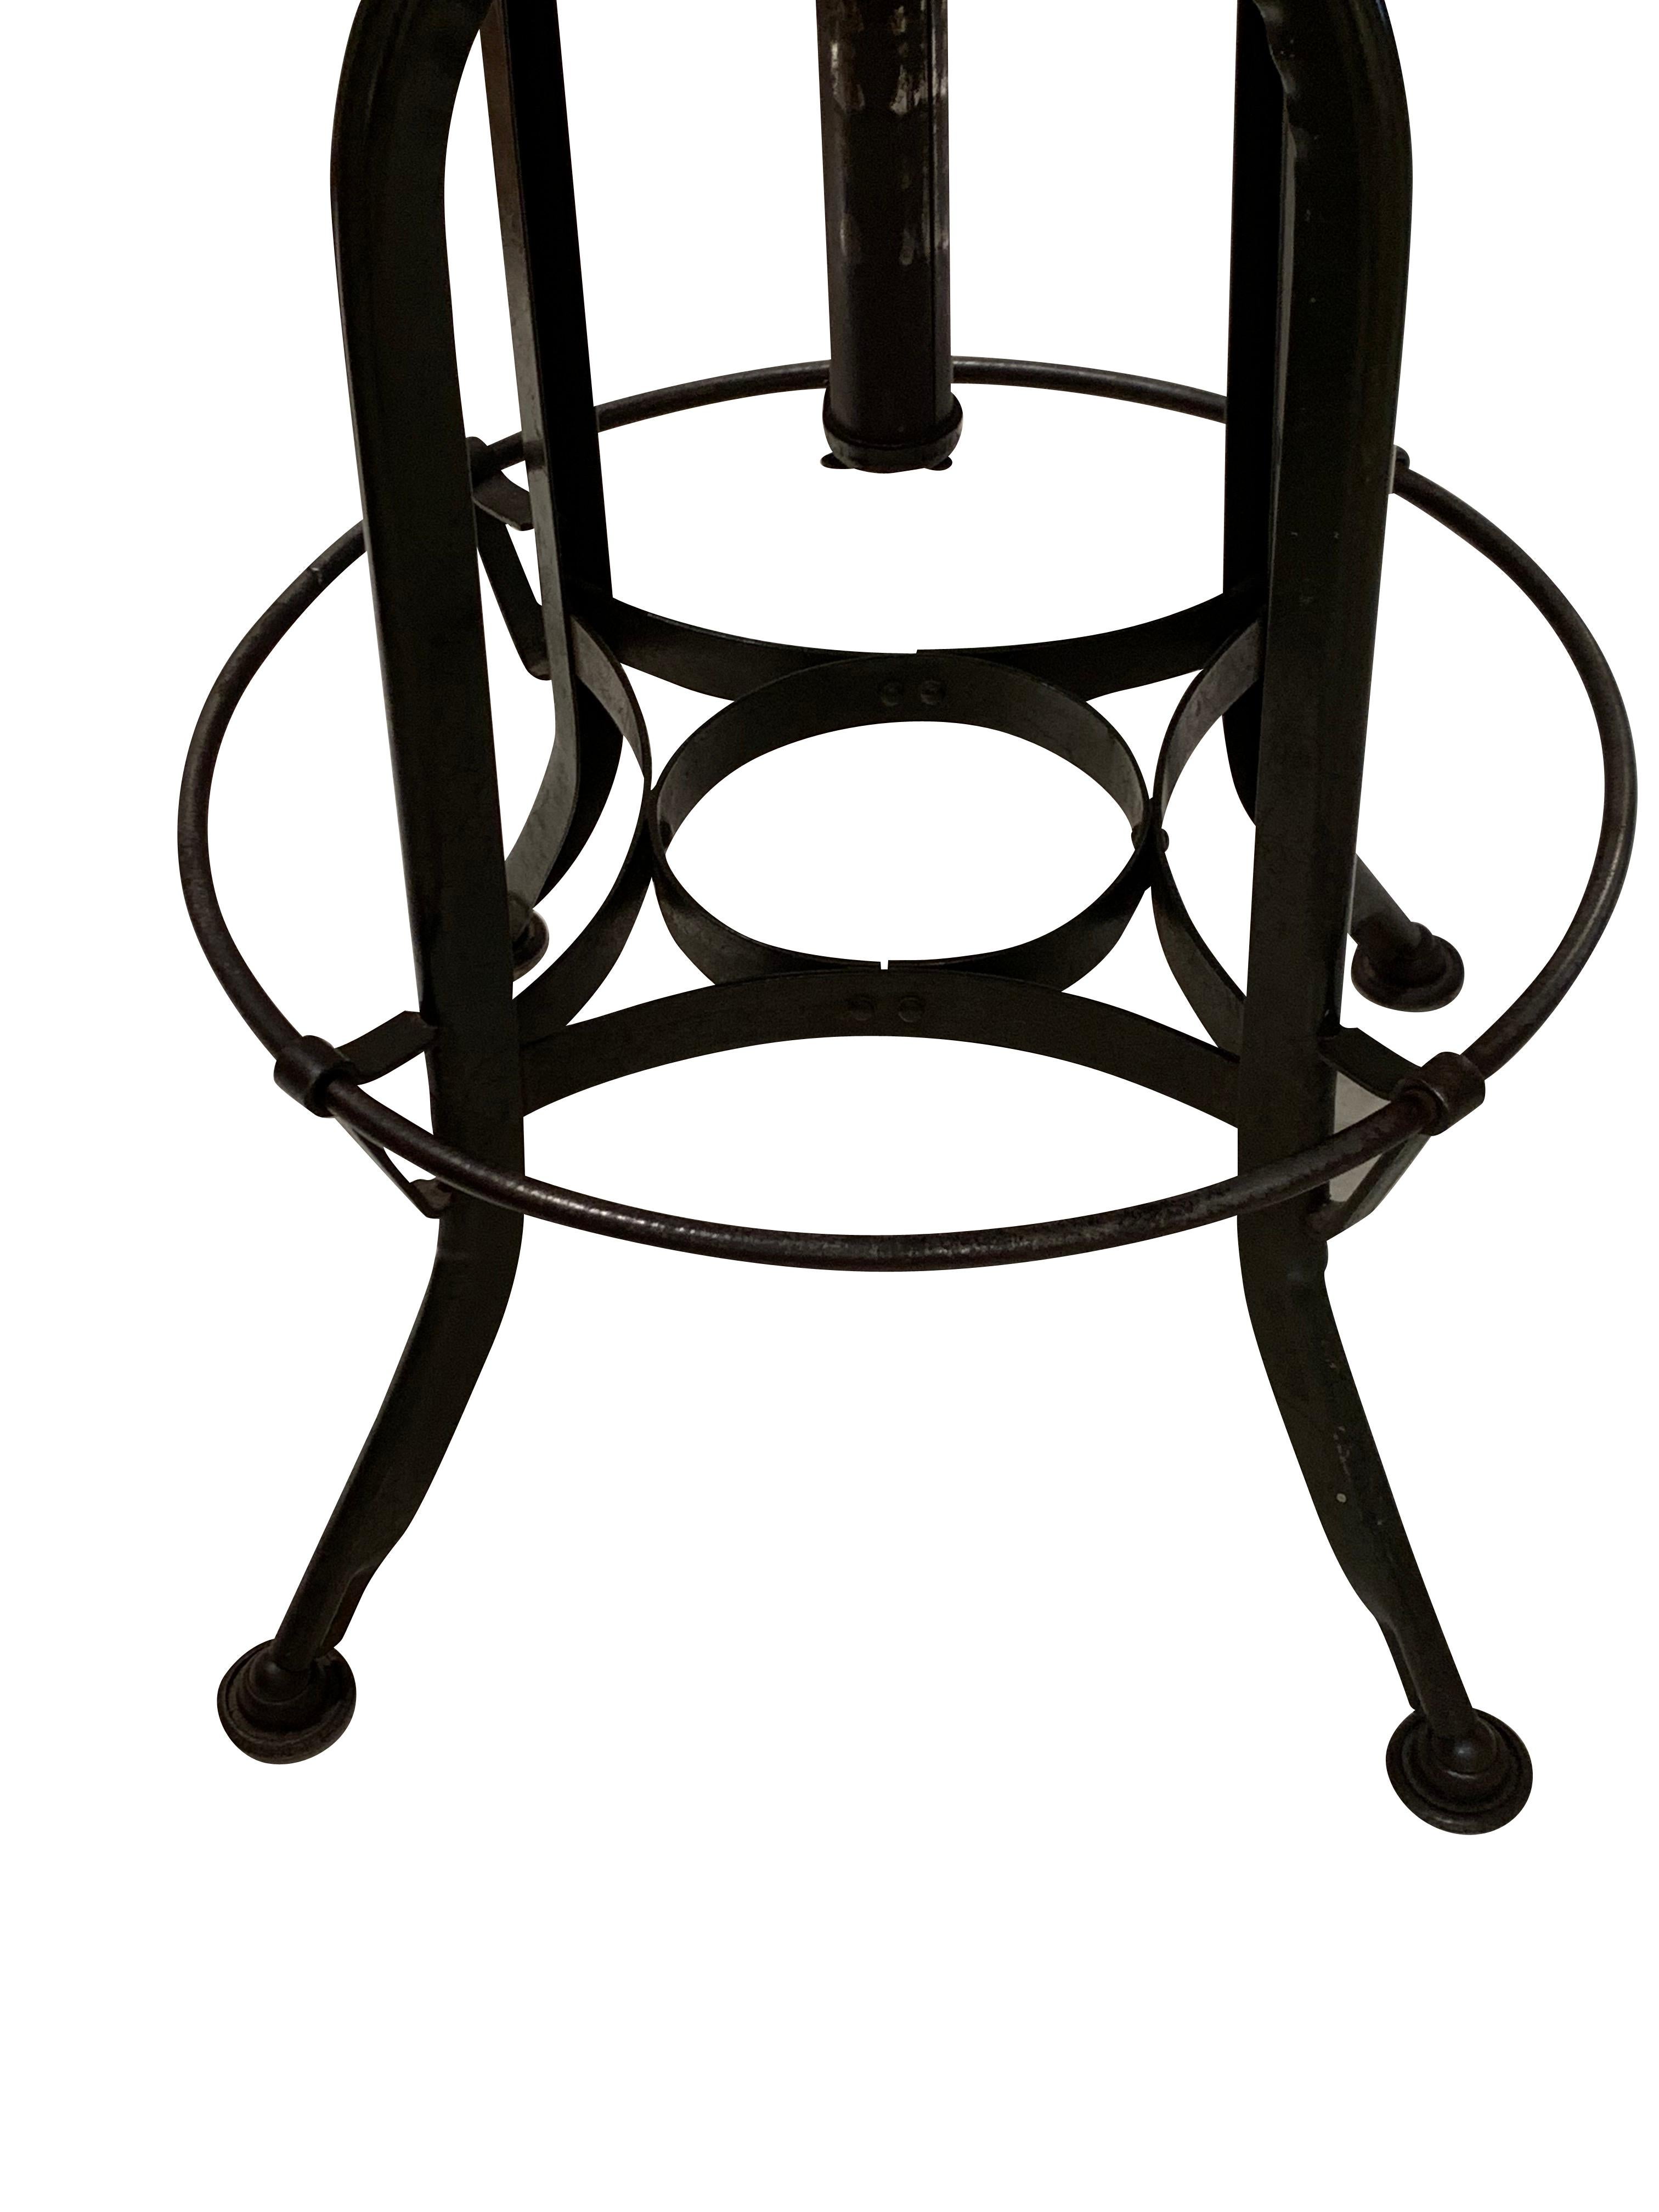 Mid century American Toledo barstool.
Wood swivel top and steel base
Seat diameter 15